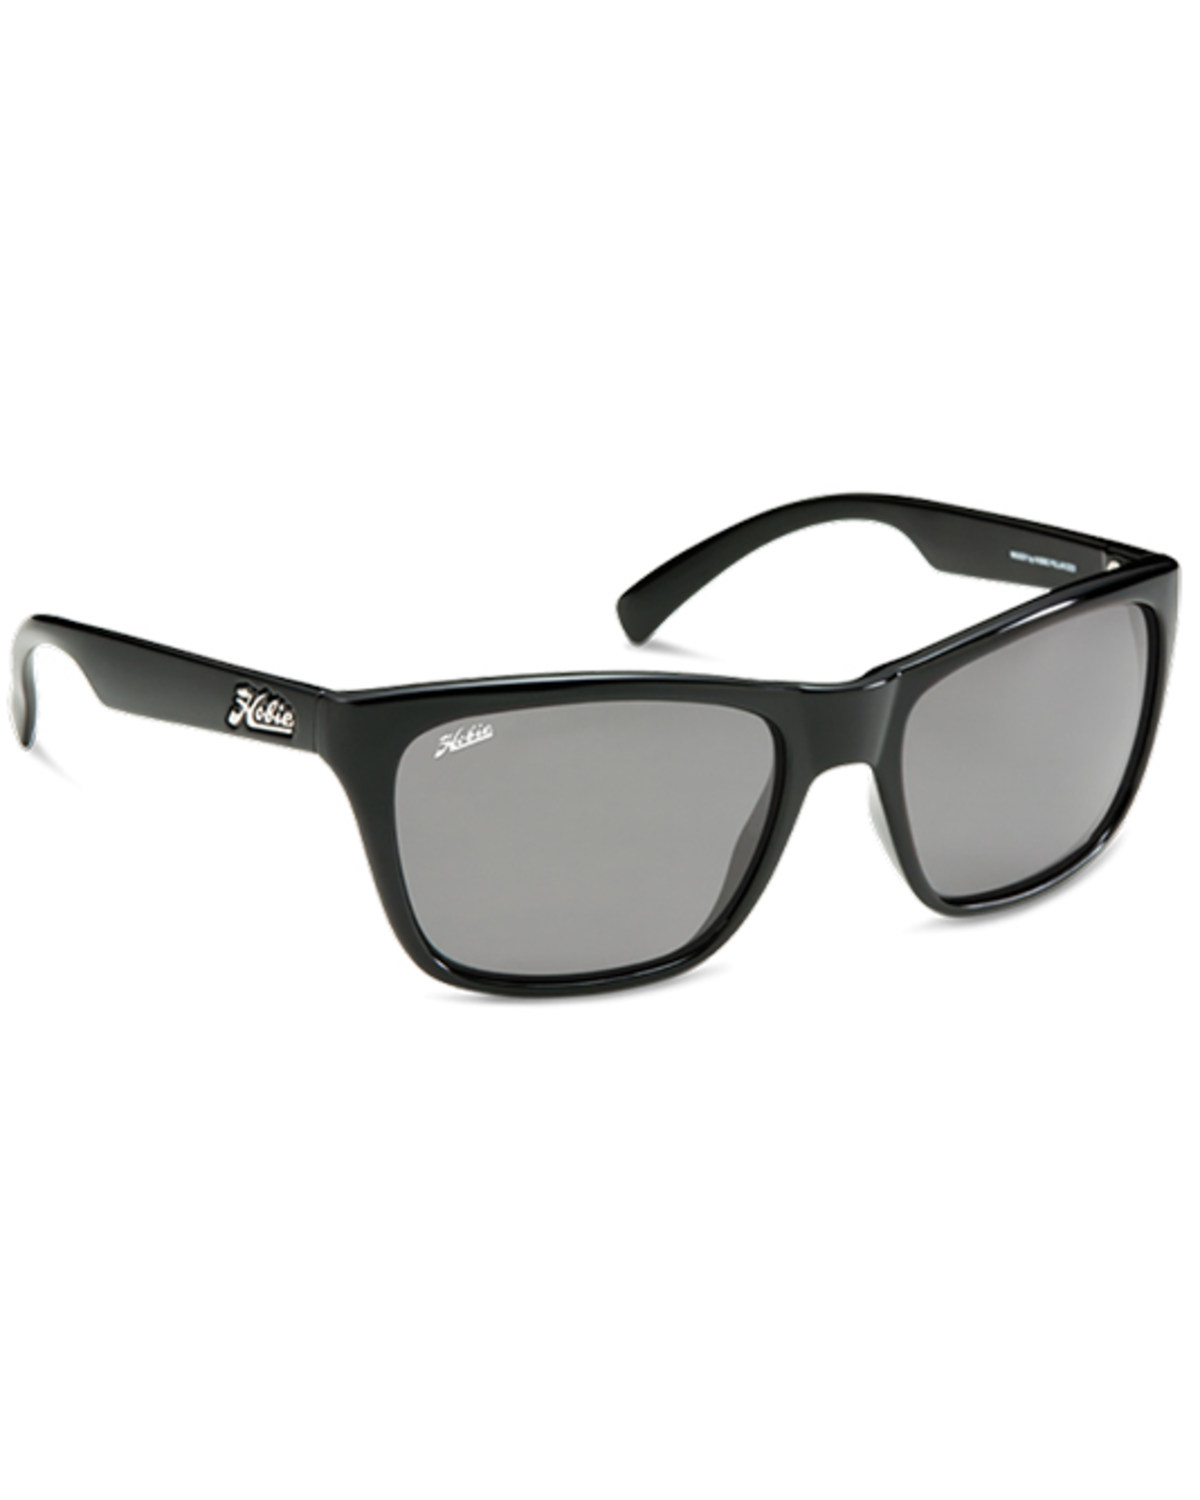 Hobie Woody Shiny Black & Gray PC Polarized Sunglasses